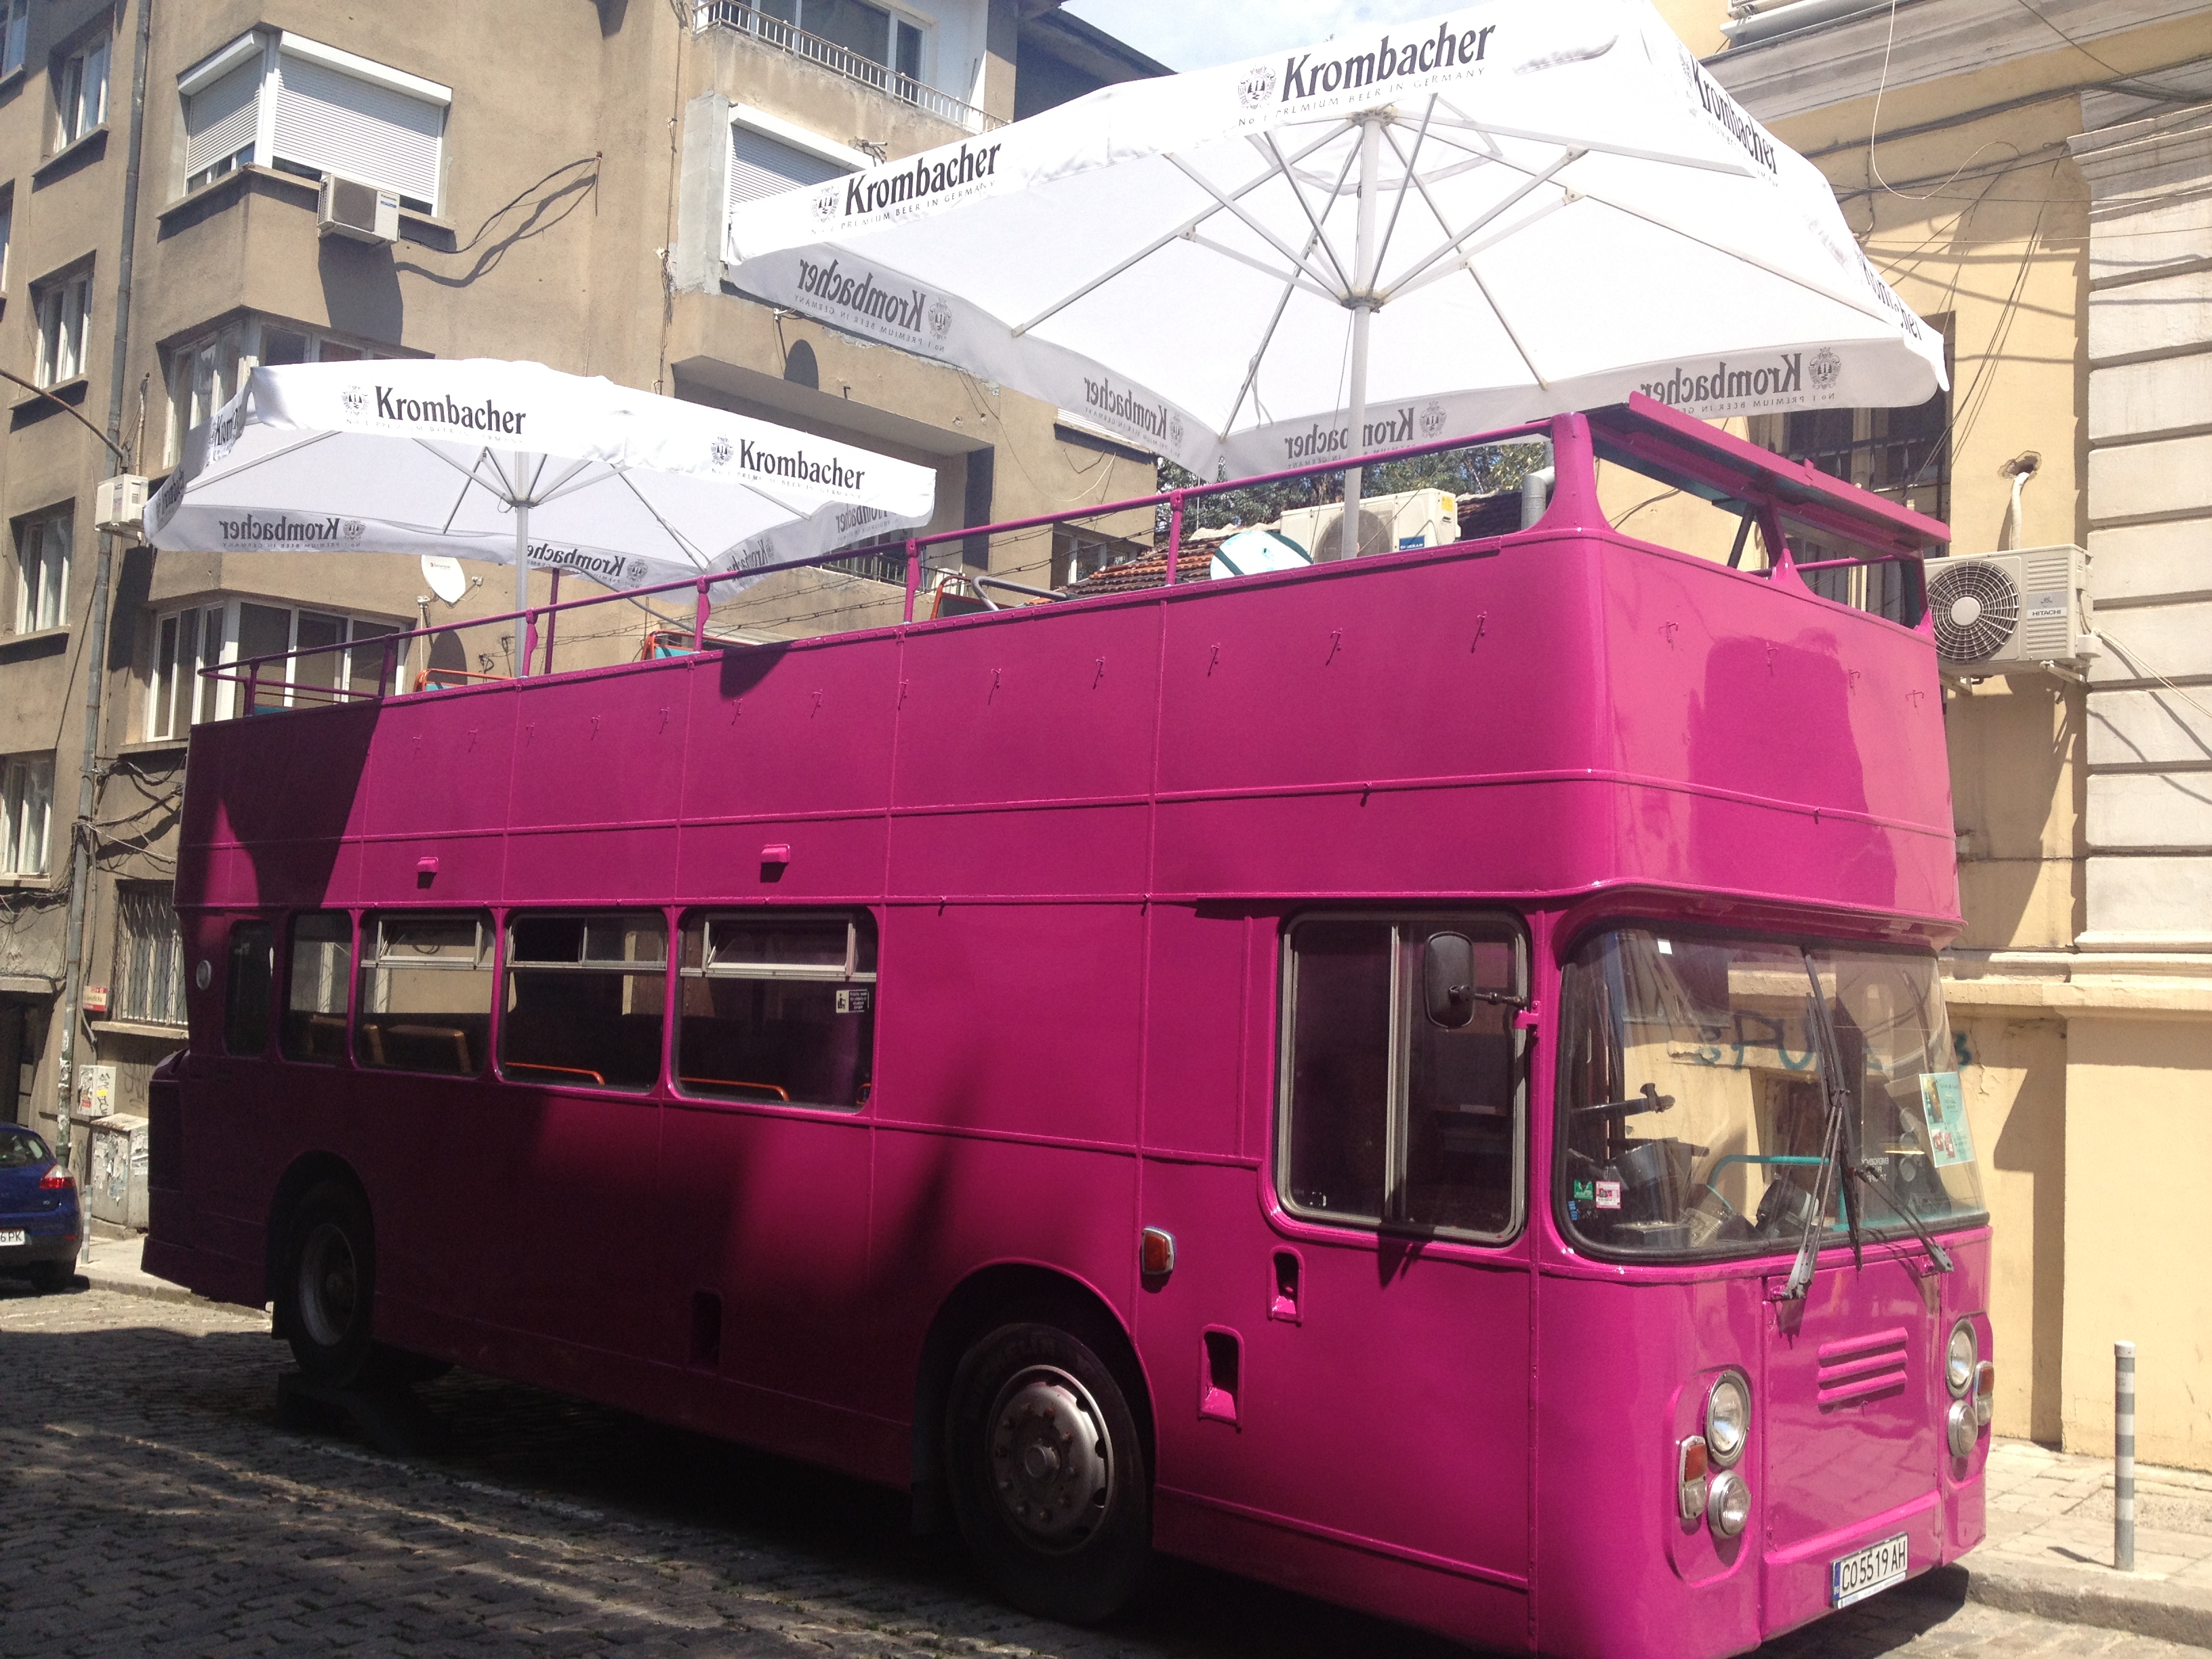 Културен автобус обикаля из София